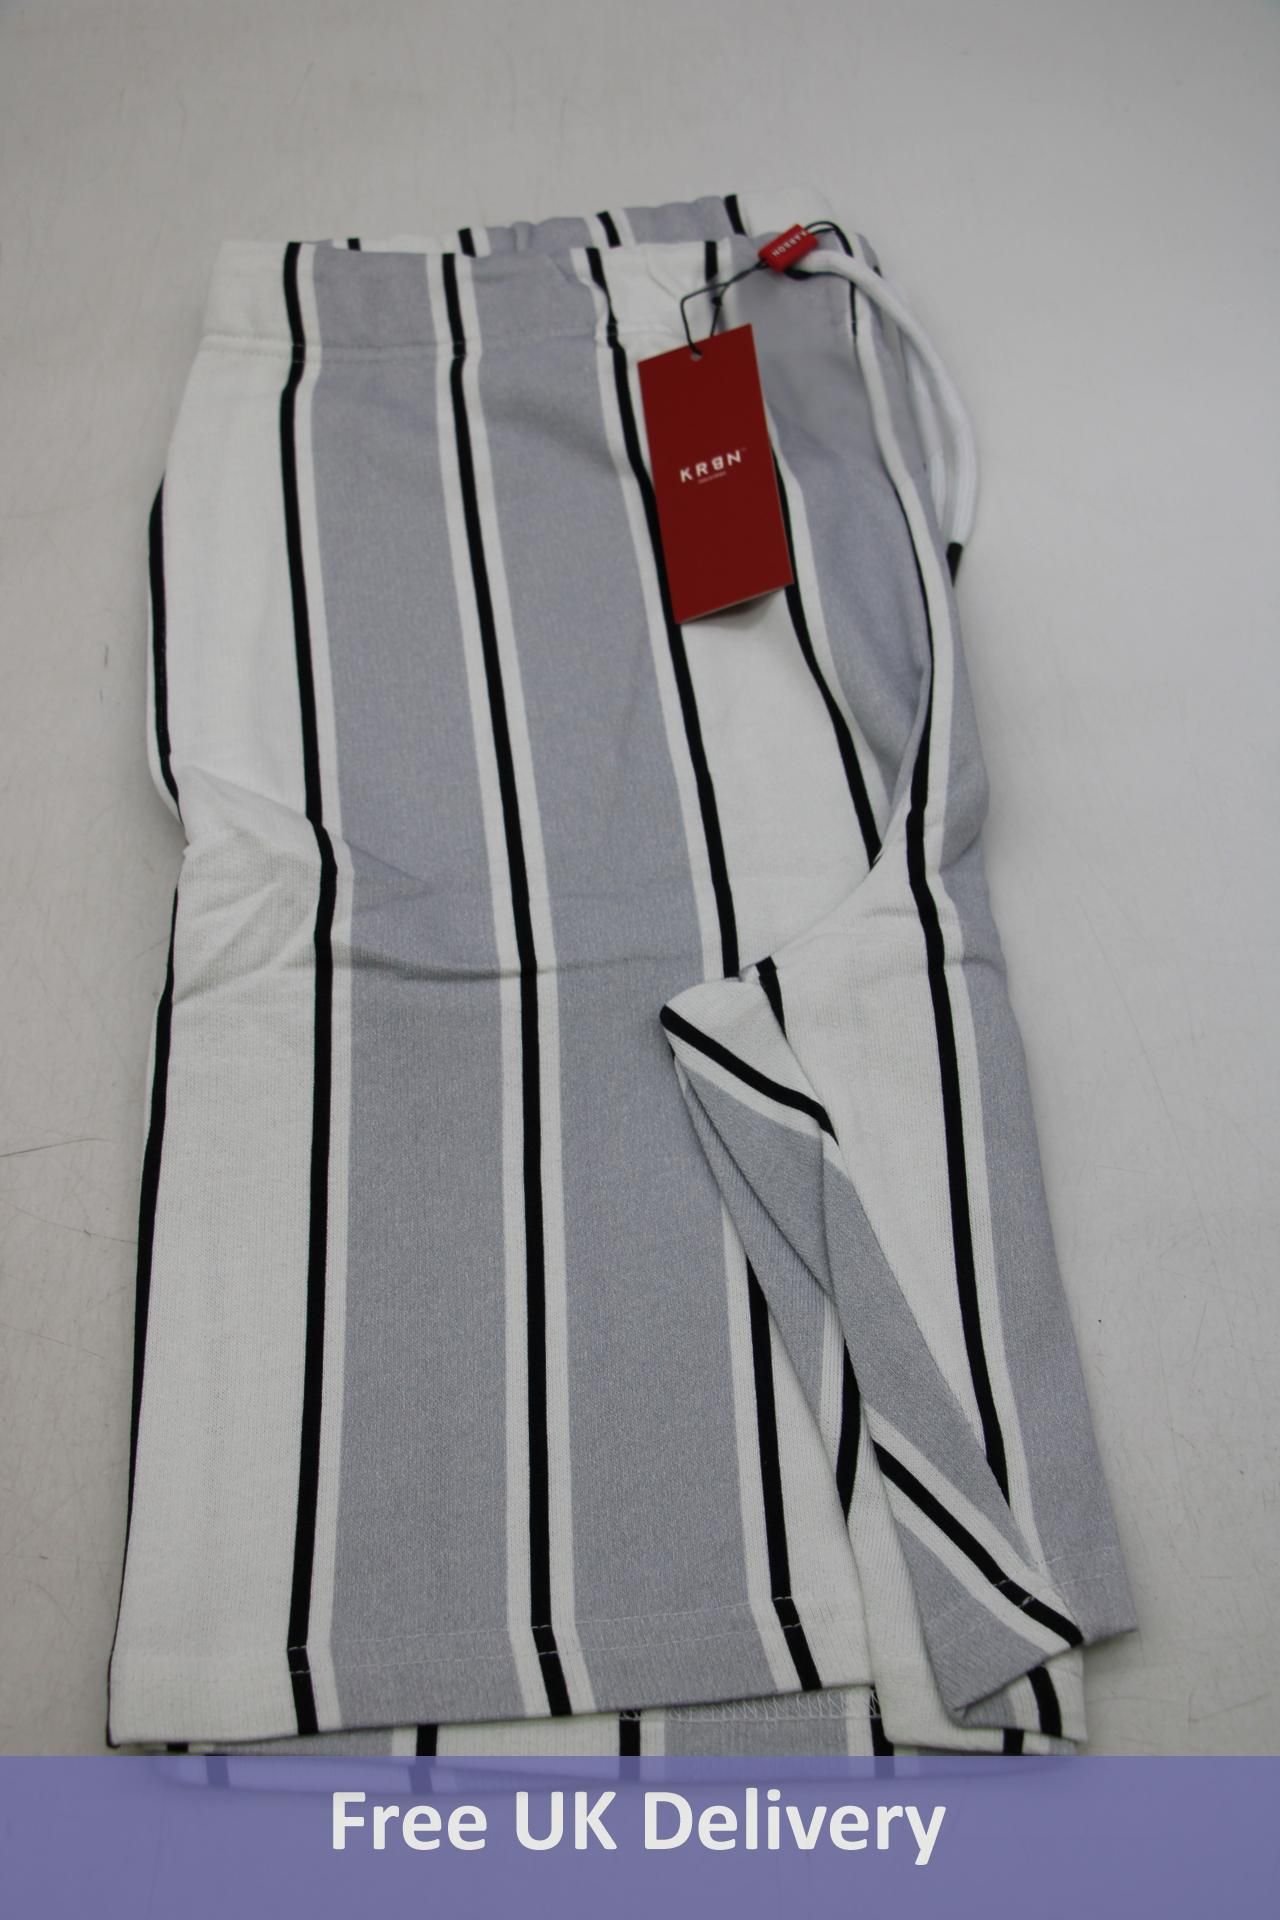 Two KRBN Men's Hamilton Striped Shorts, Grey, Large